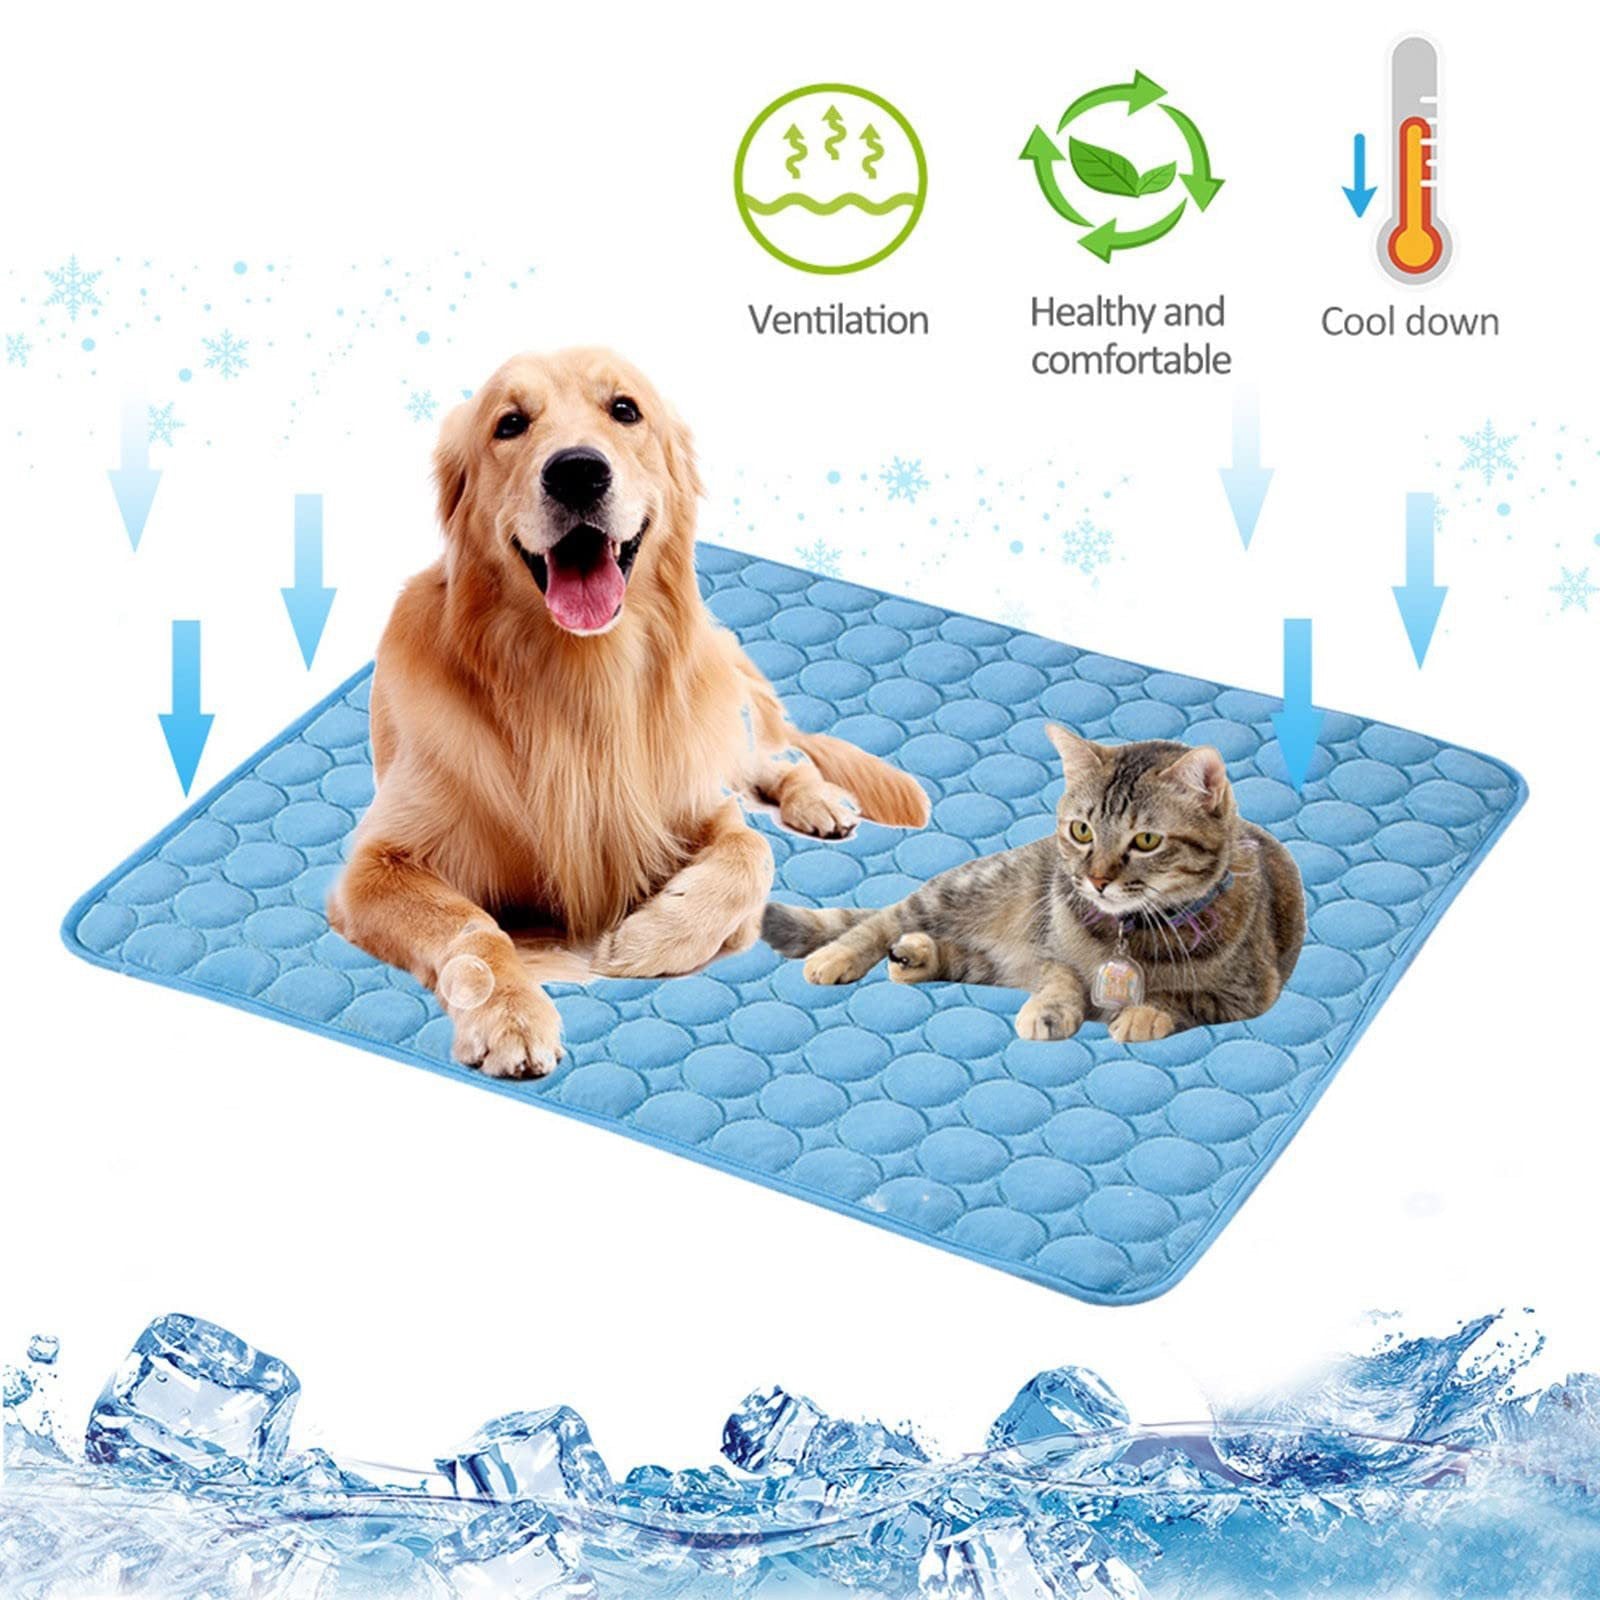 Pet Cooling Mat - The self-cooling mat for pets at Hobbyklok